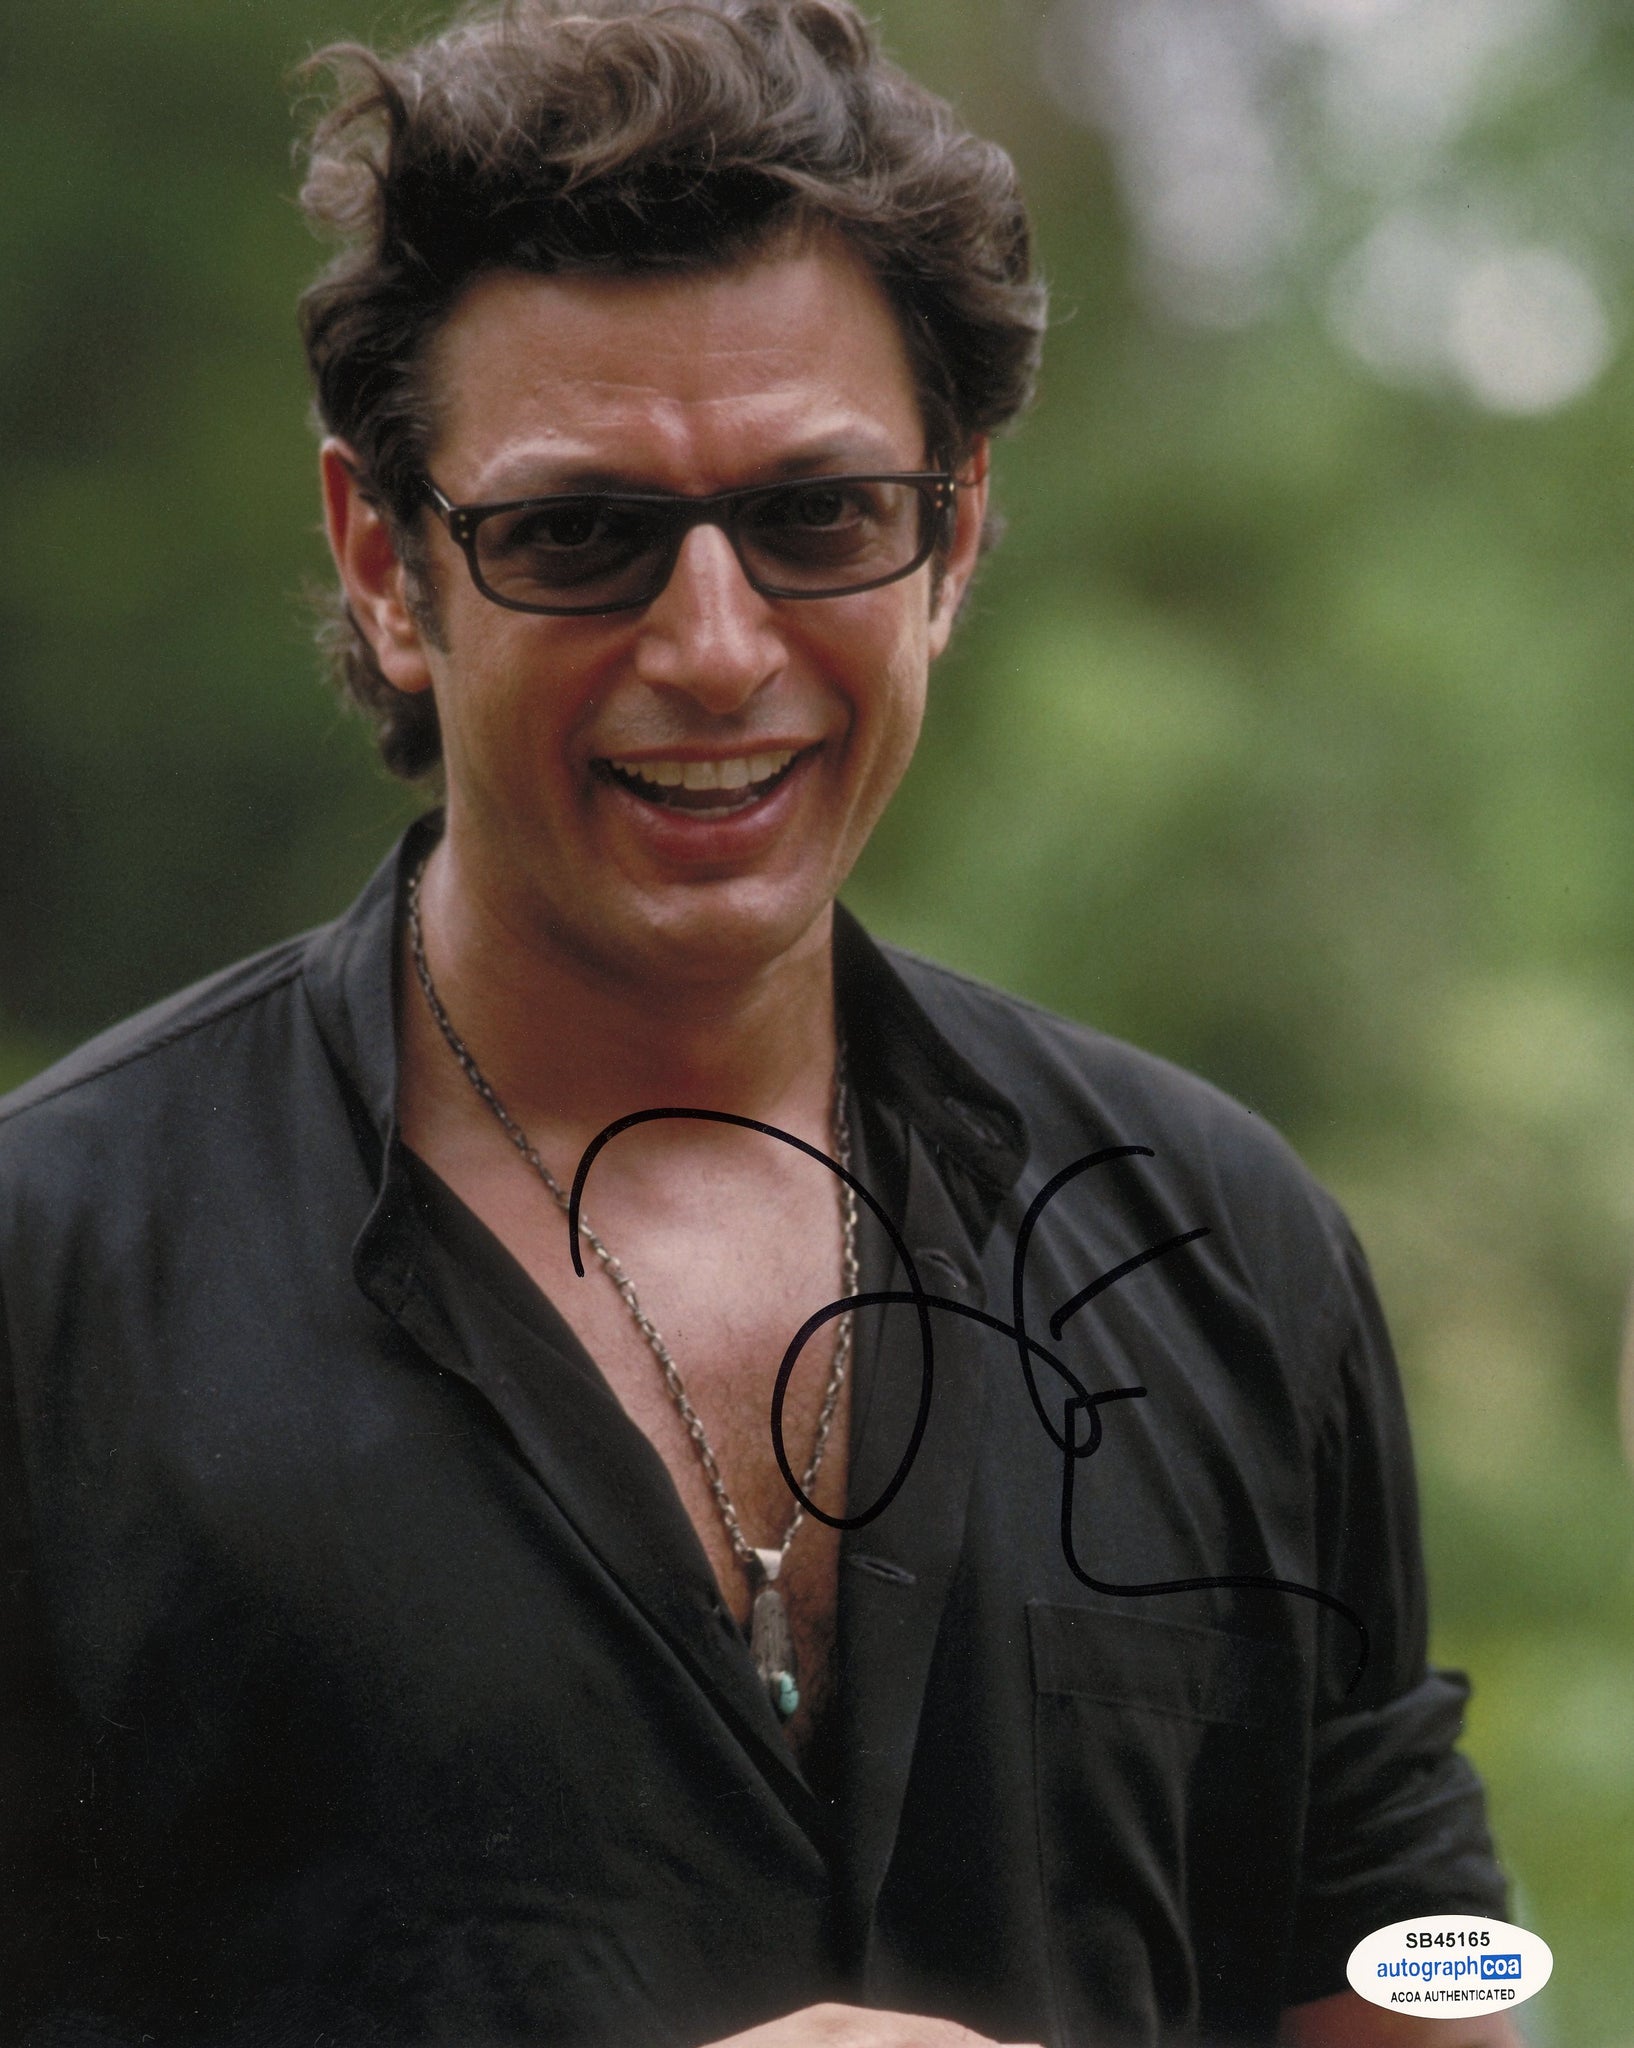 Jeff Goldblum Jurassic Park Signed Autograph 8x10 Photo ACOA